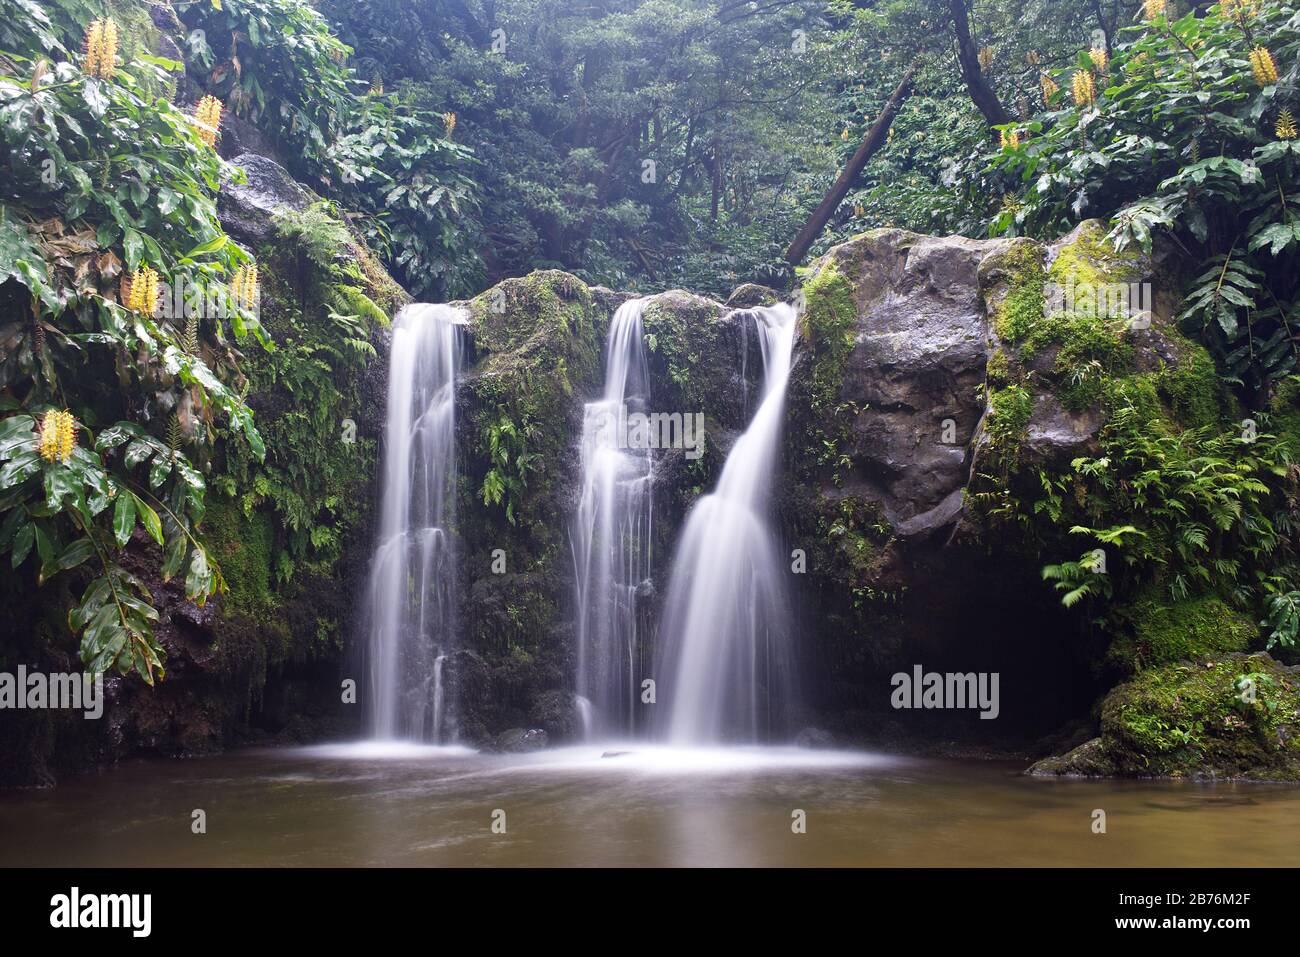 Natural waterfall surrounded by rocks and foliage at the Parque Natural da Ribeira dos Caldeirões, São Miguel island, Azores. Stock Photo